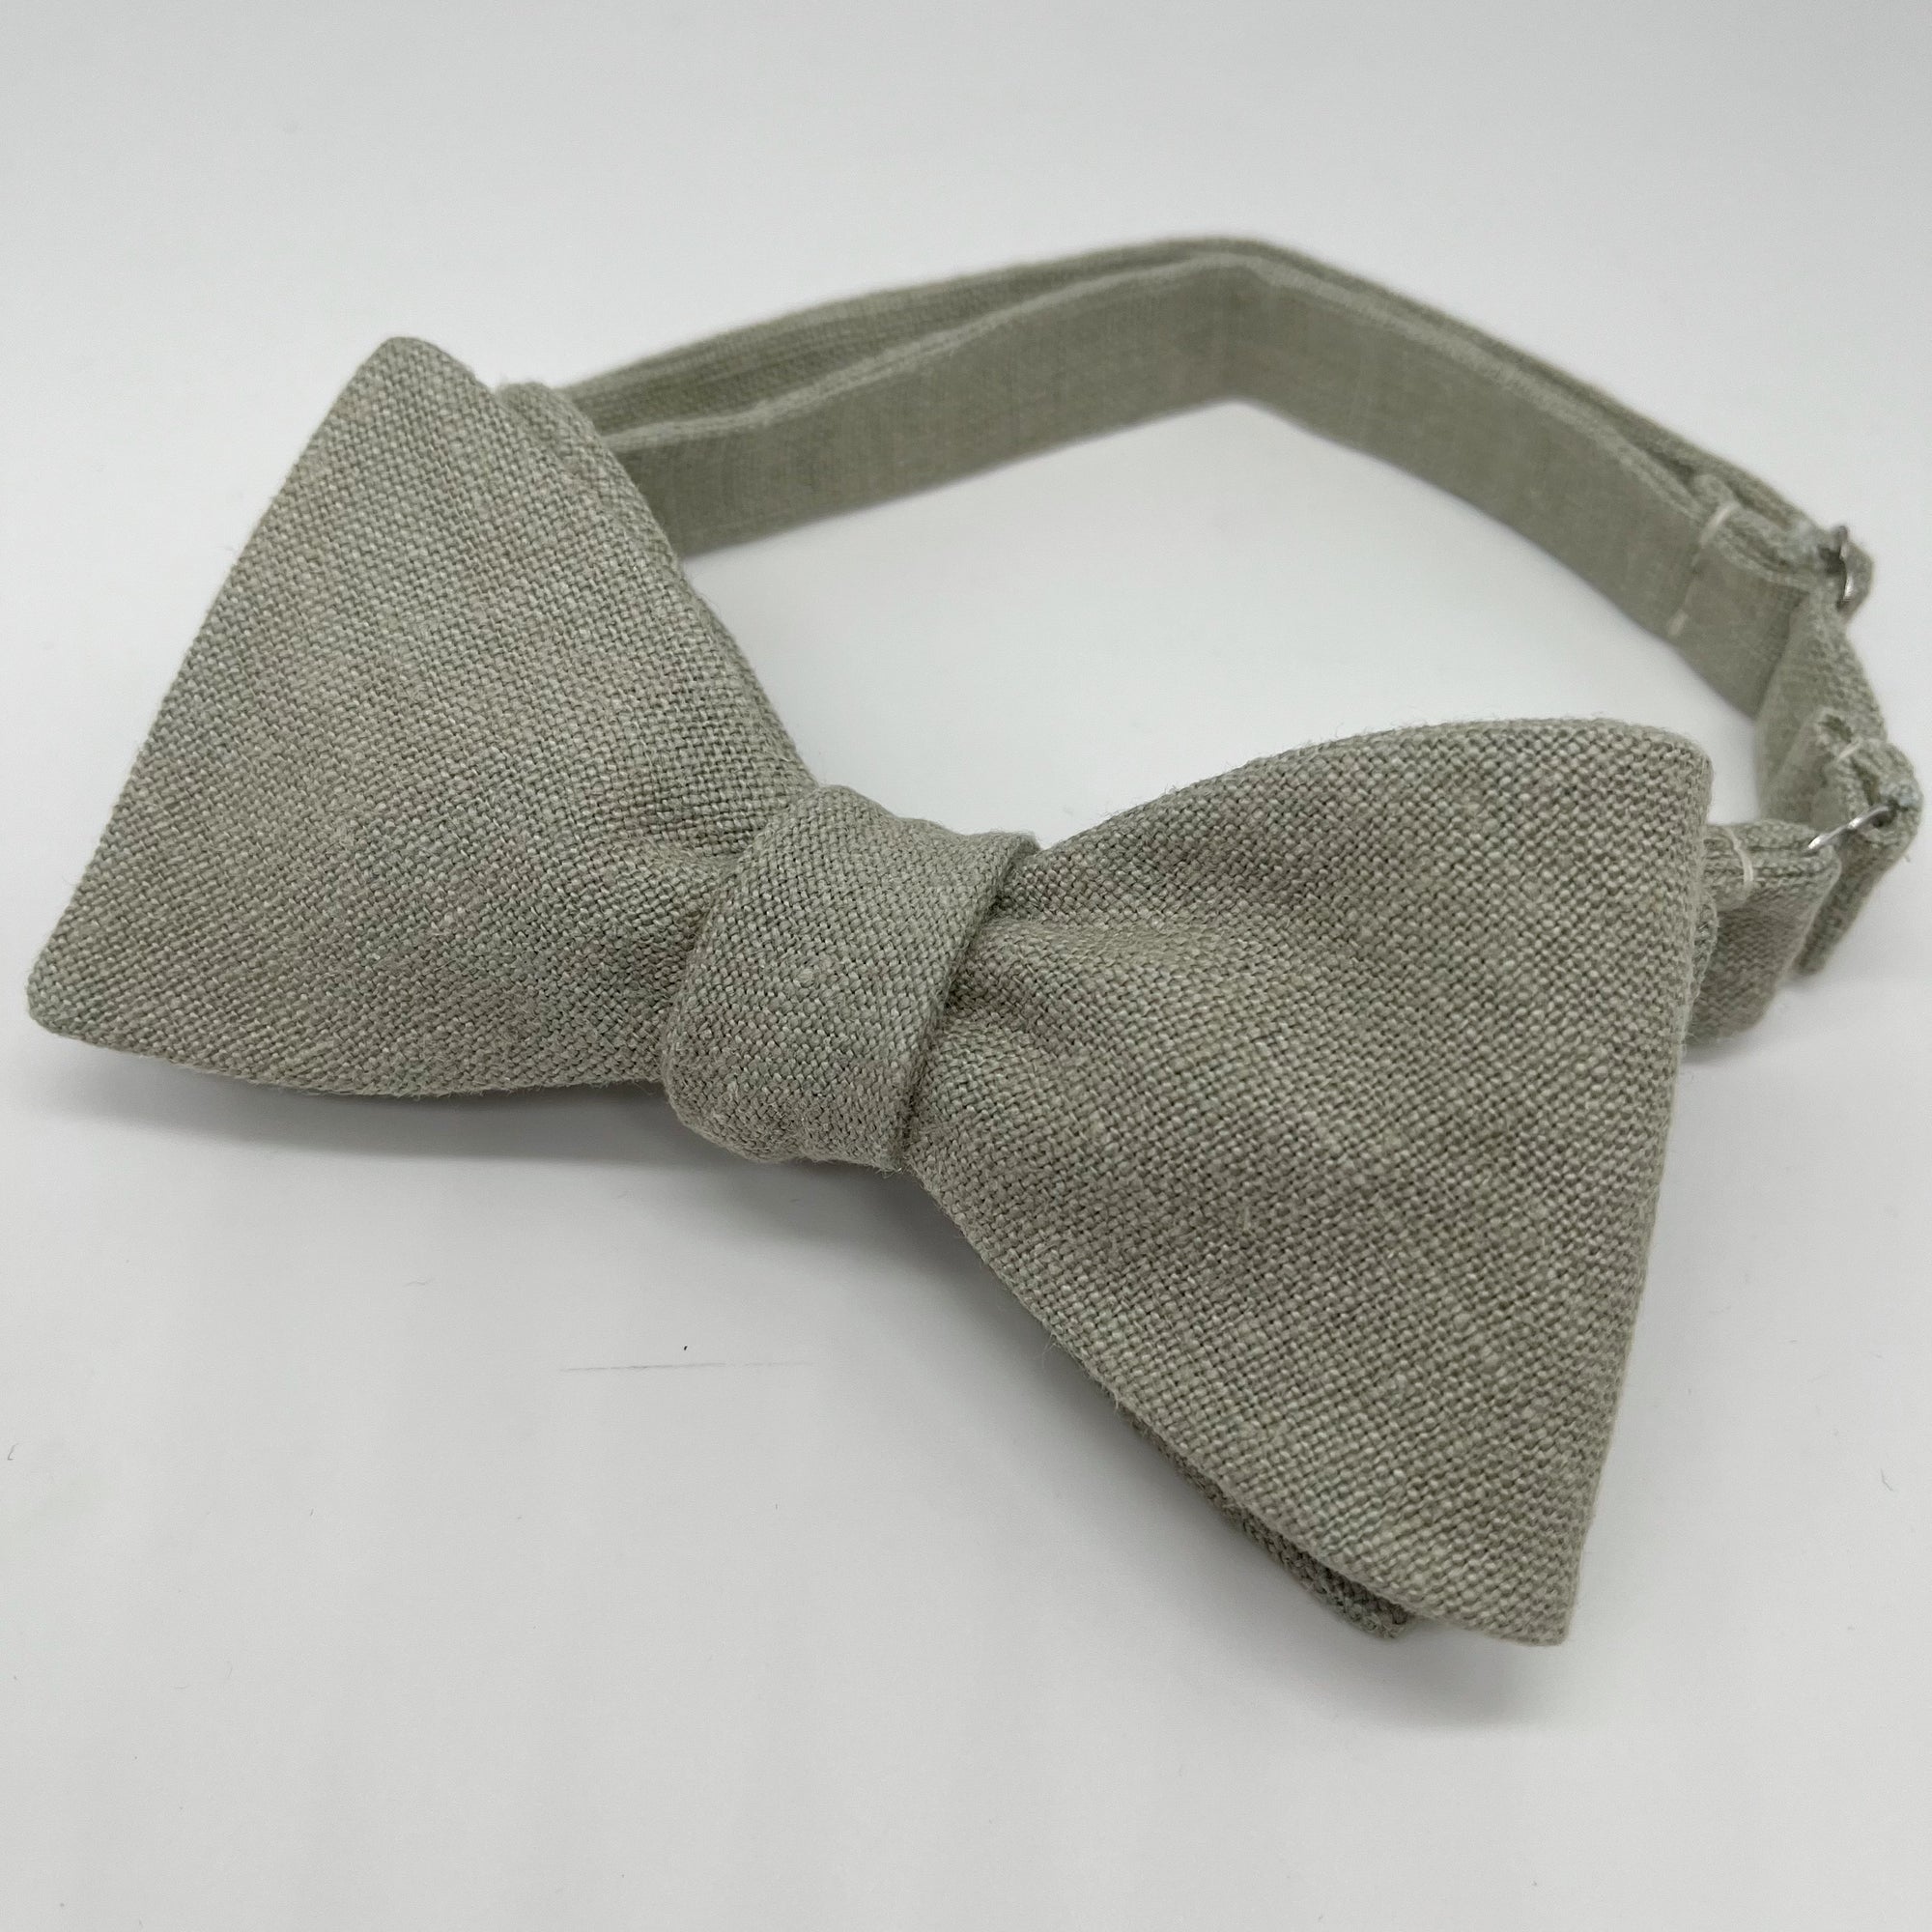 Self-Tie Bow Tie in Light Vintage Sage Green Irish Linen